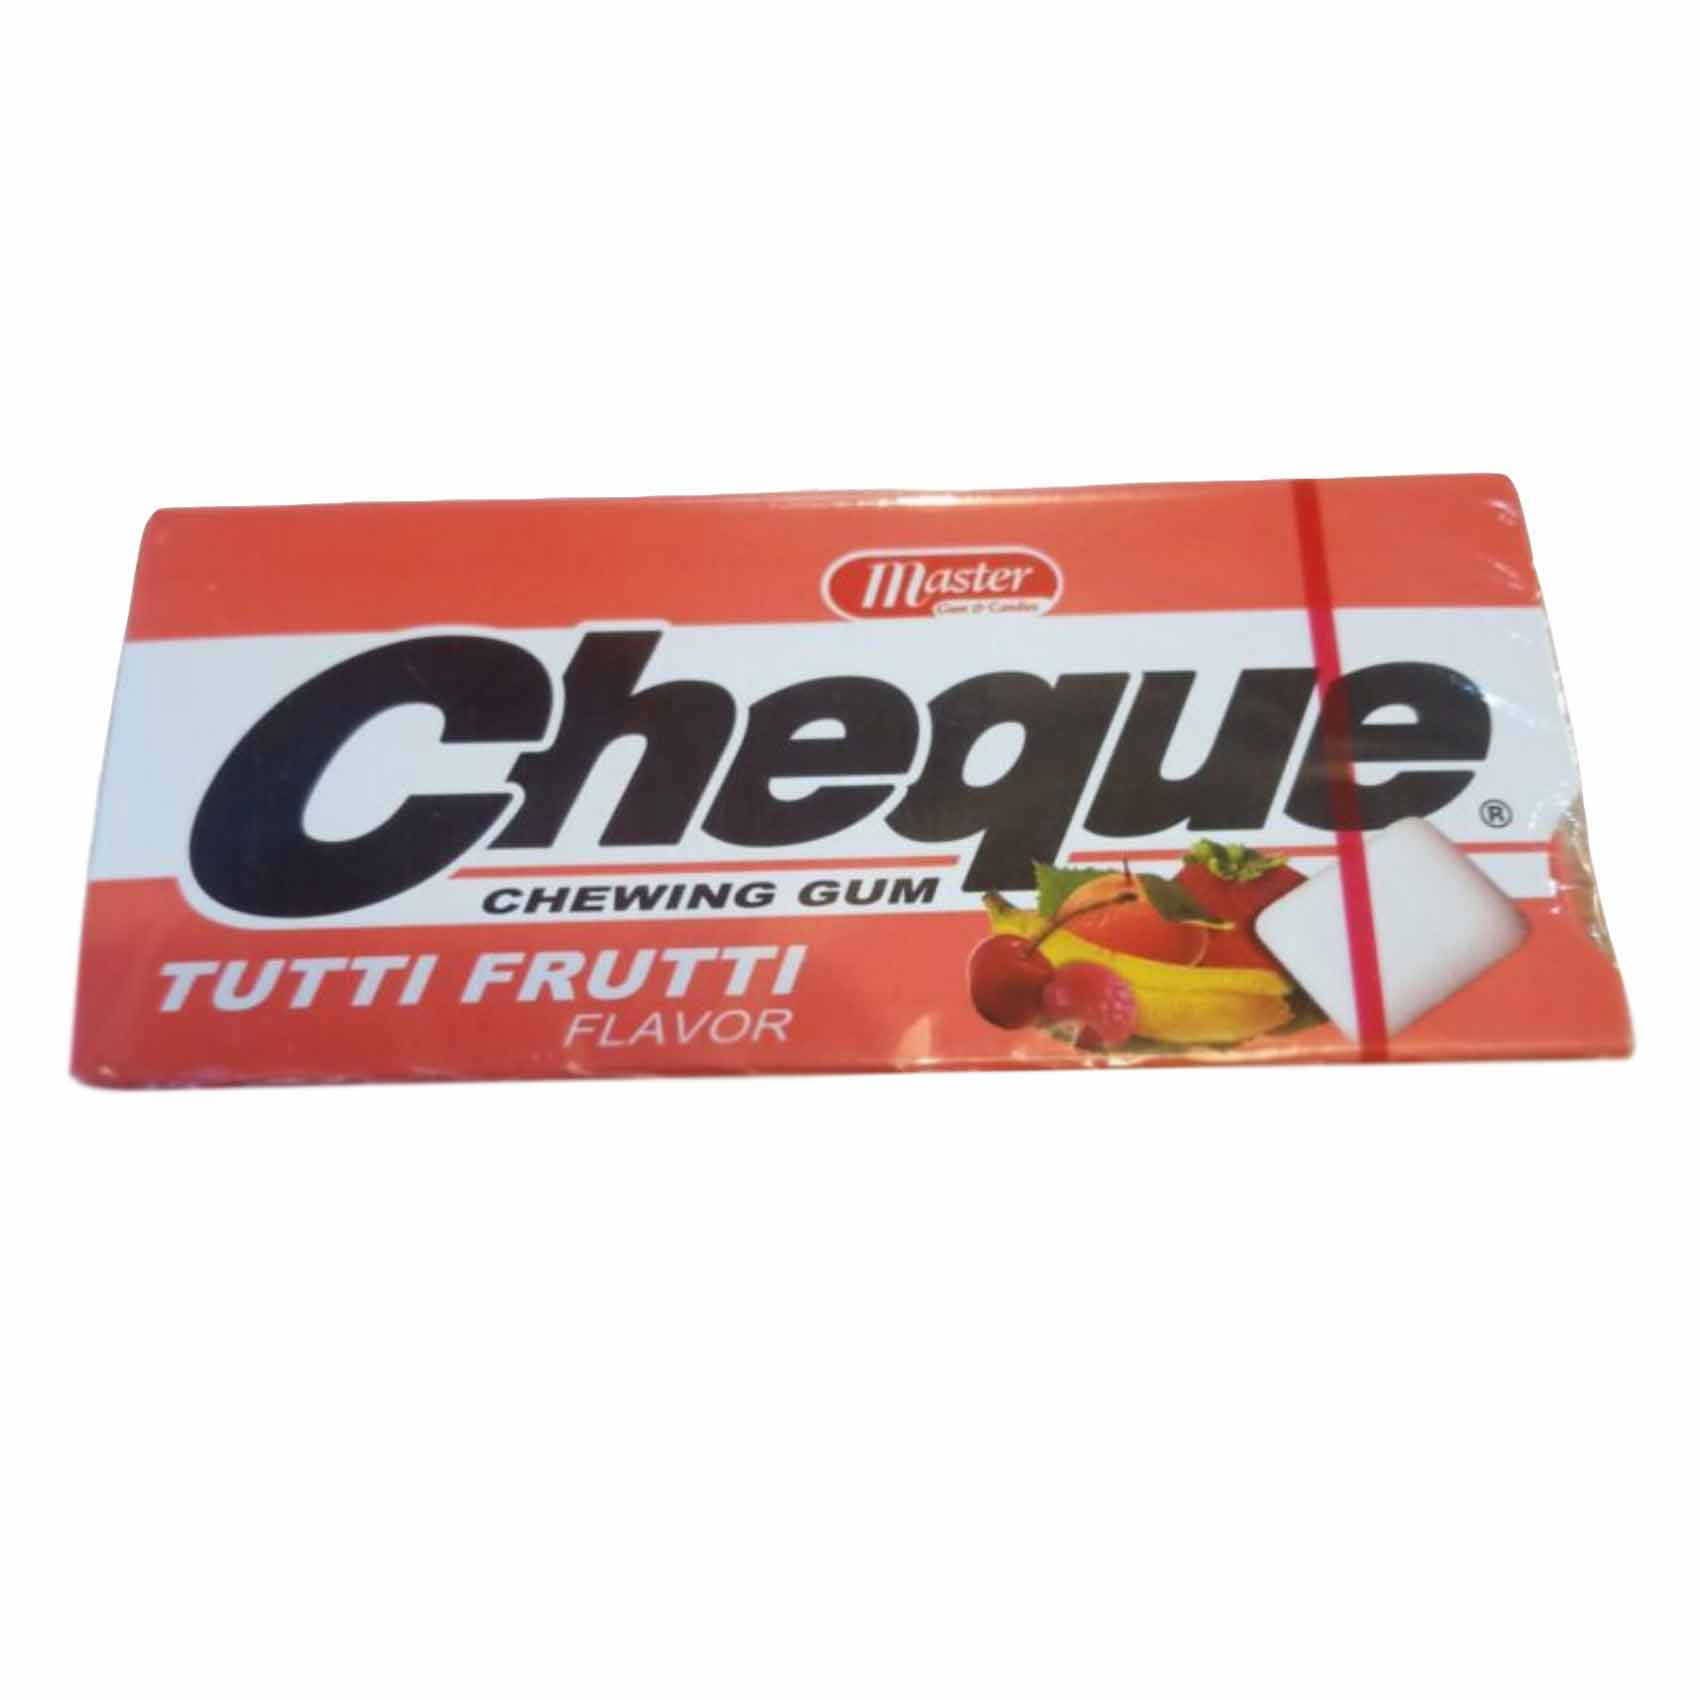 Master Cheque Tutti Fruiti Chewing Gum 13.5g